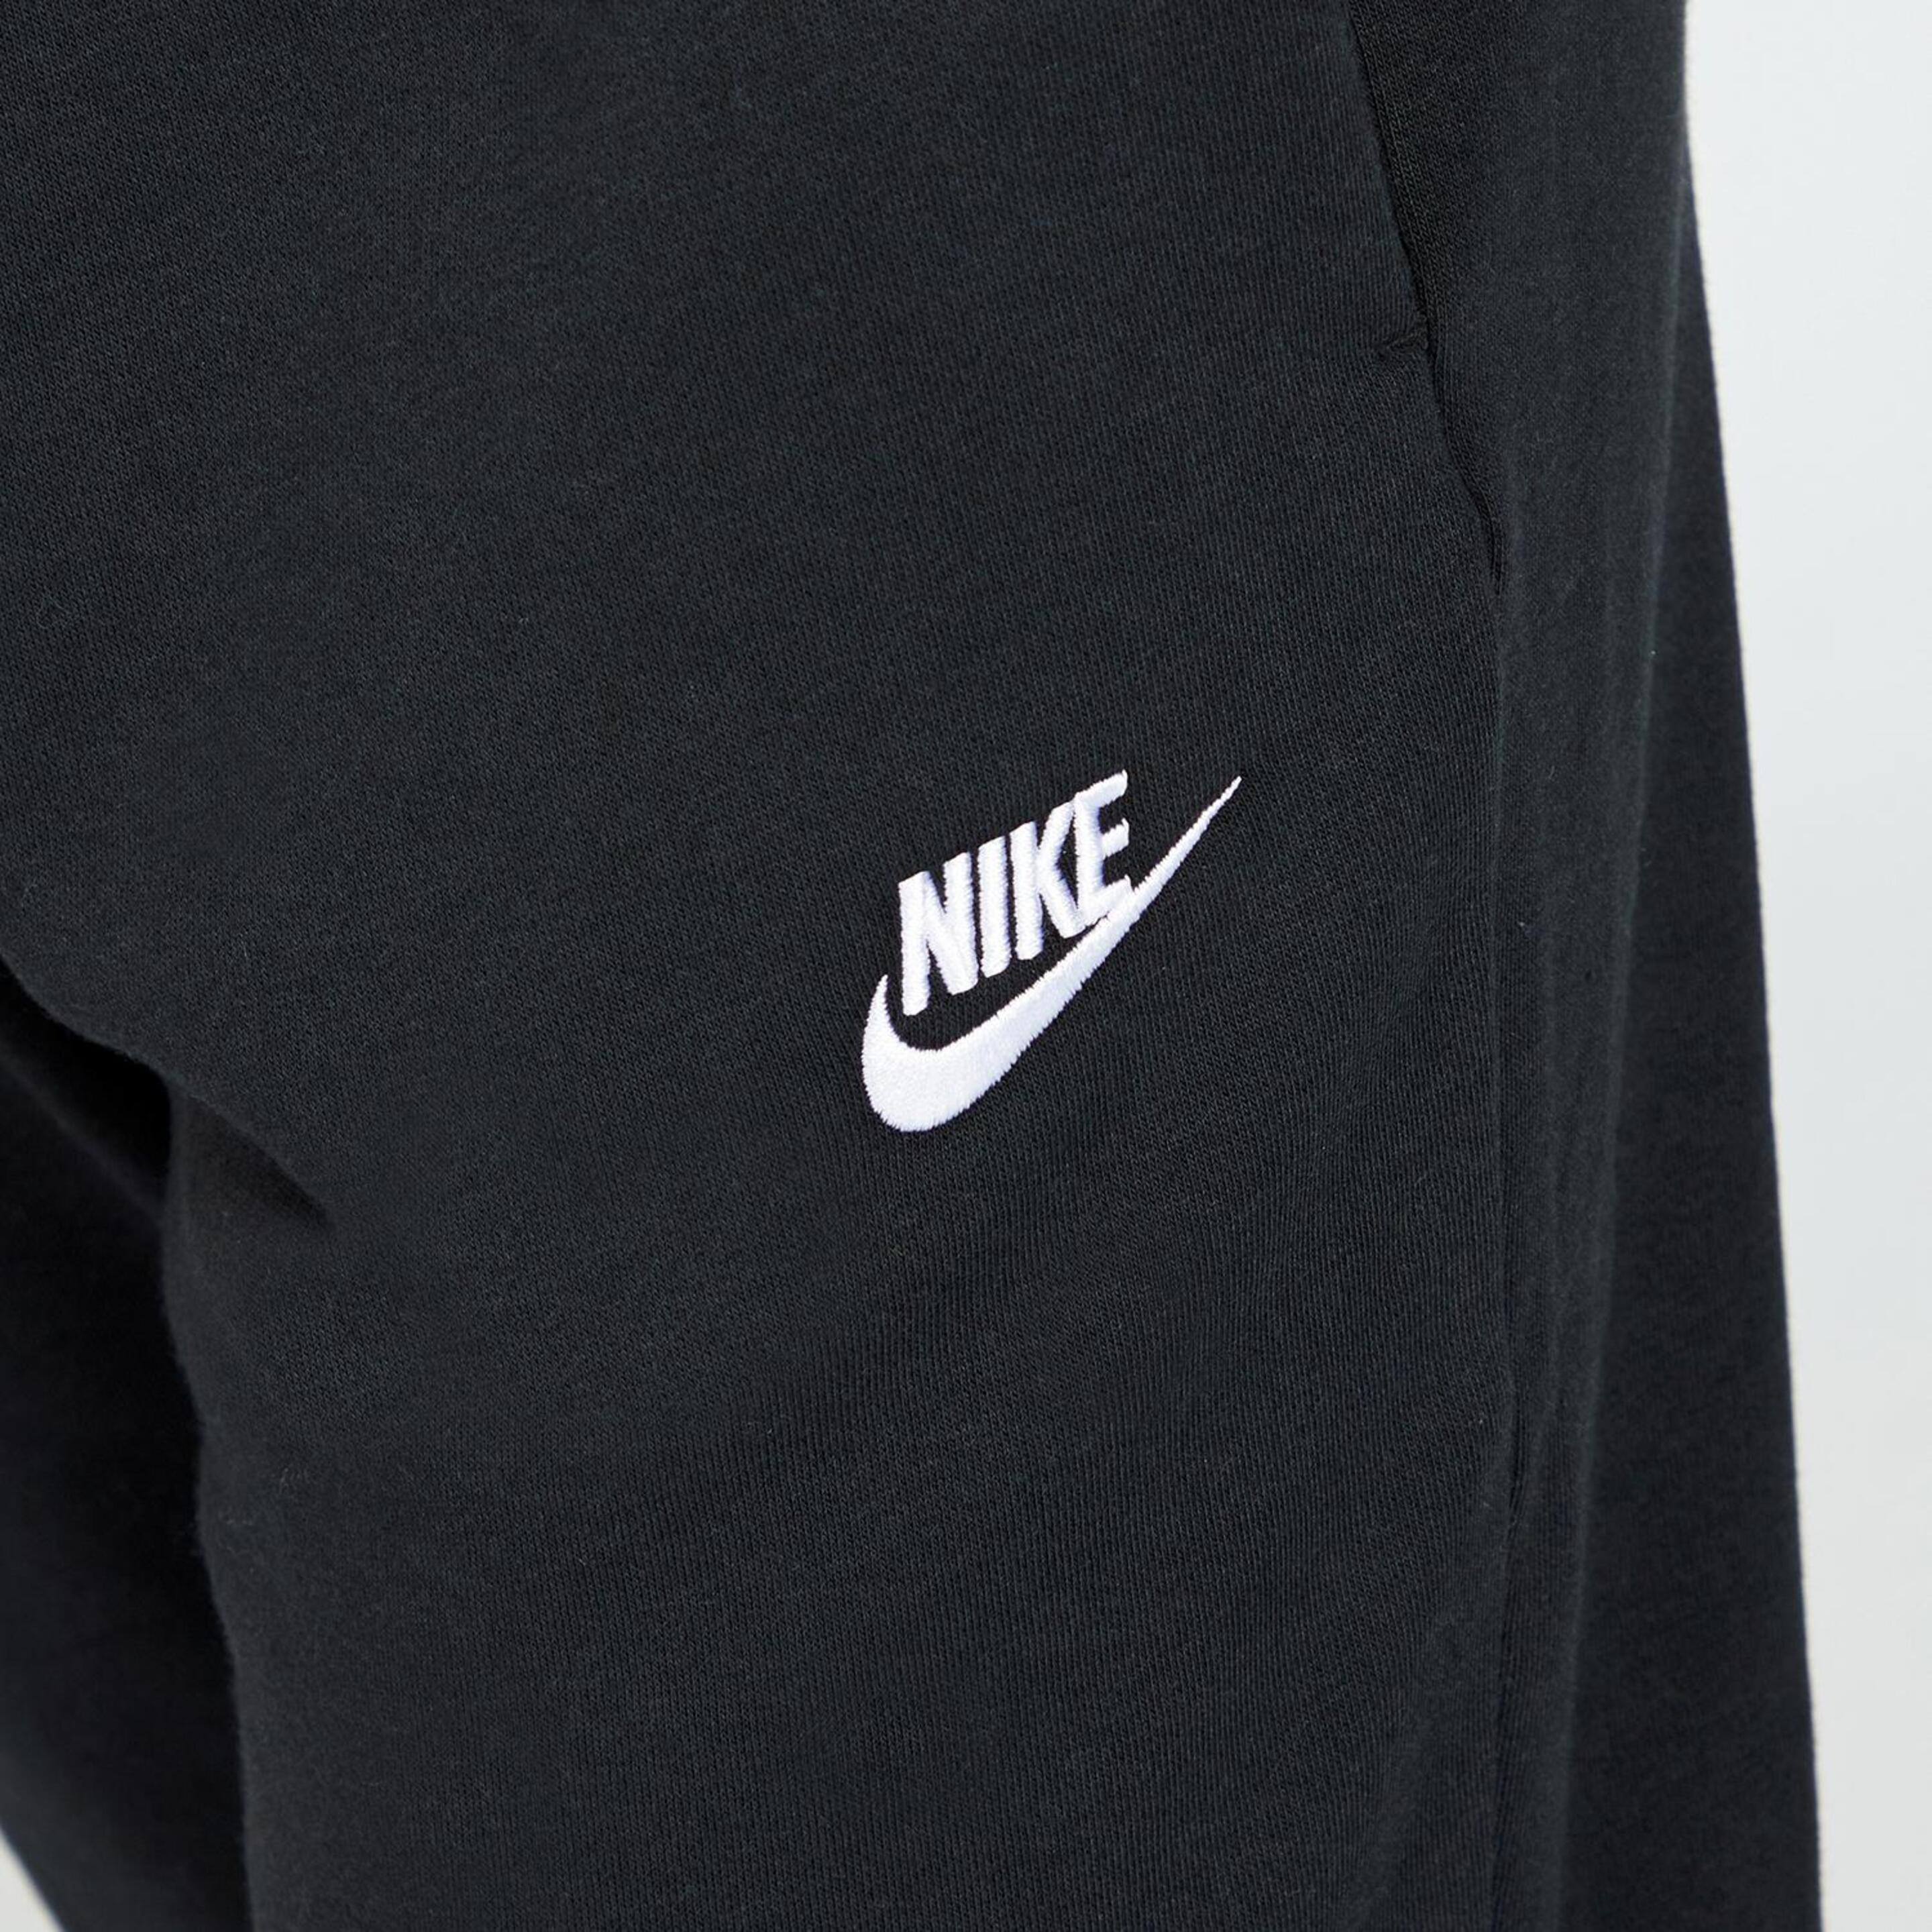 Pantalón Chándal Nike